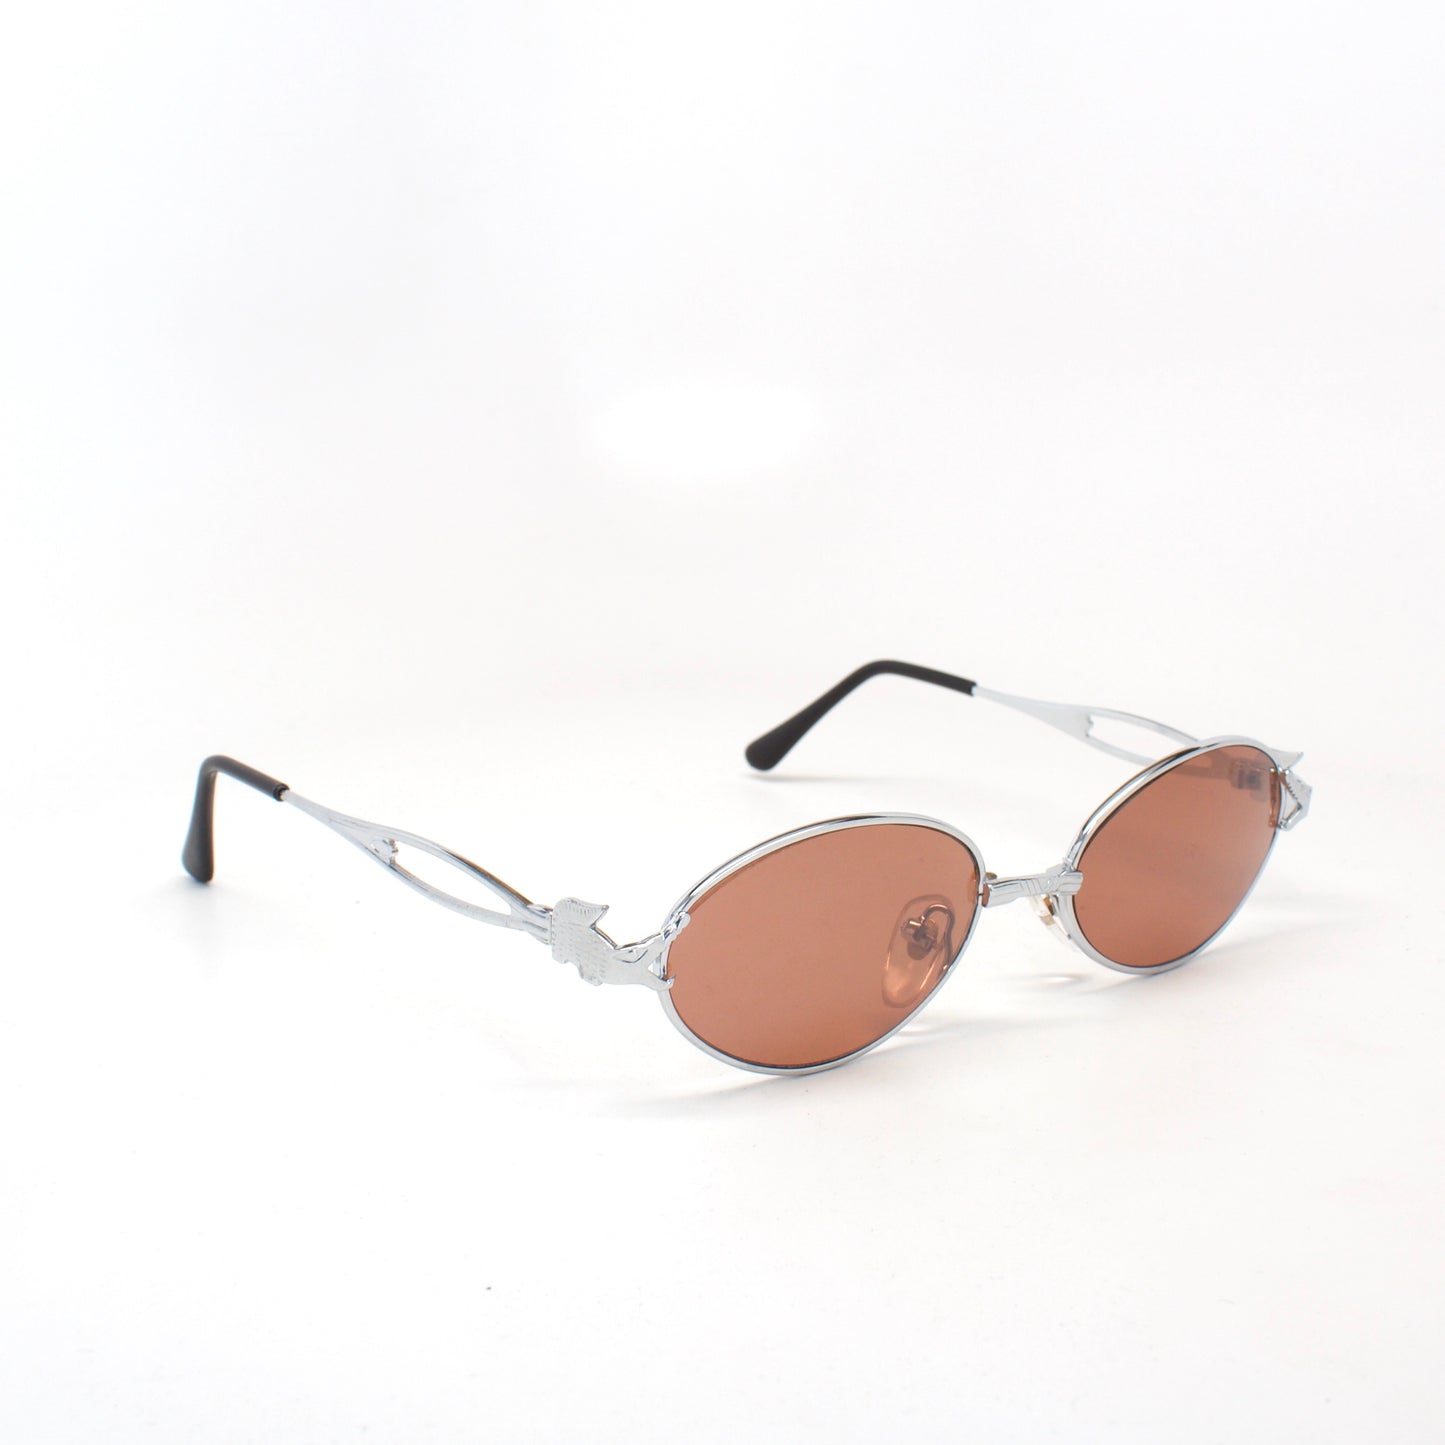 Vintage Standard Size 90s Verona Nightvision Oval Sunglasses - Silver